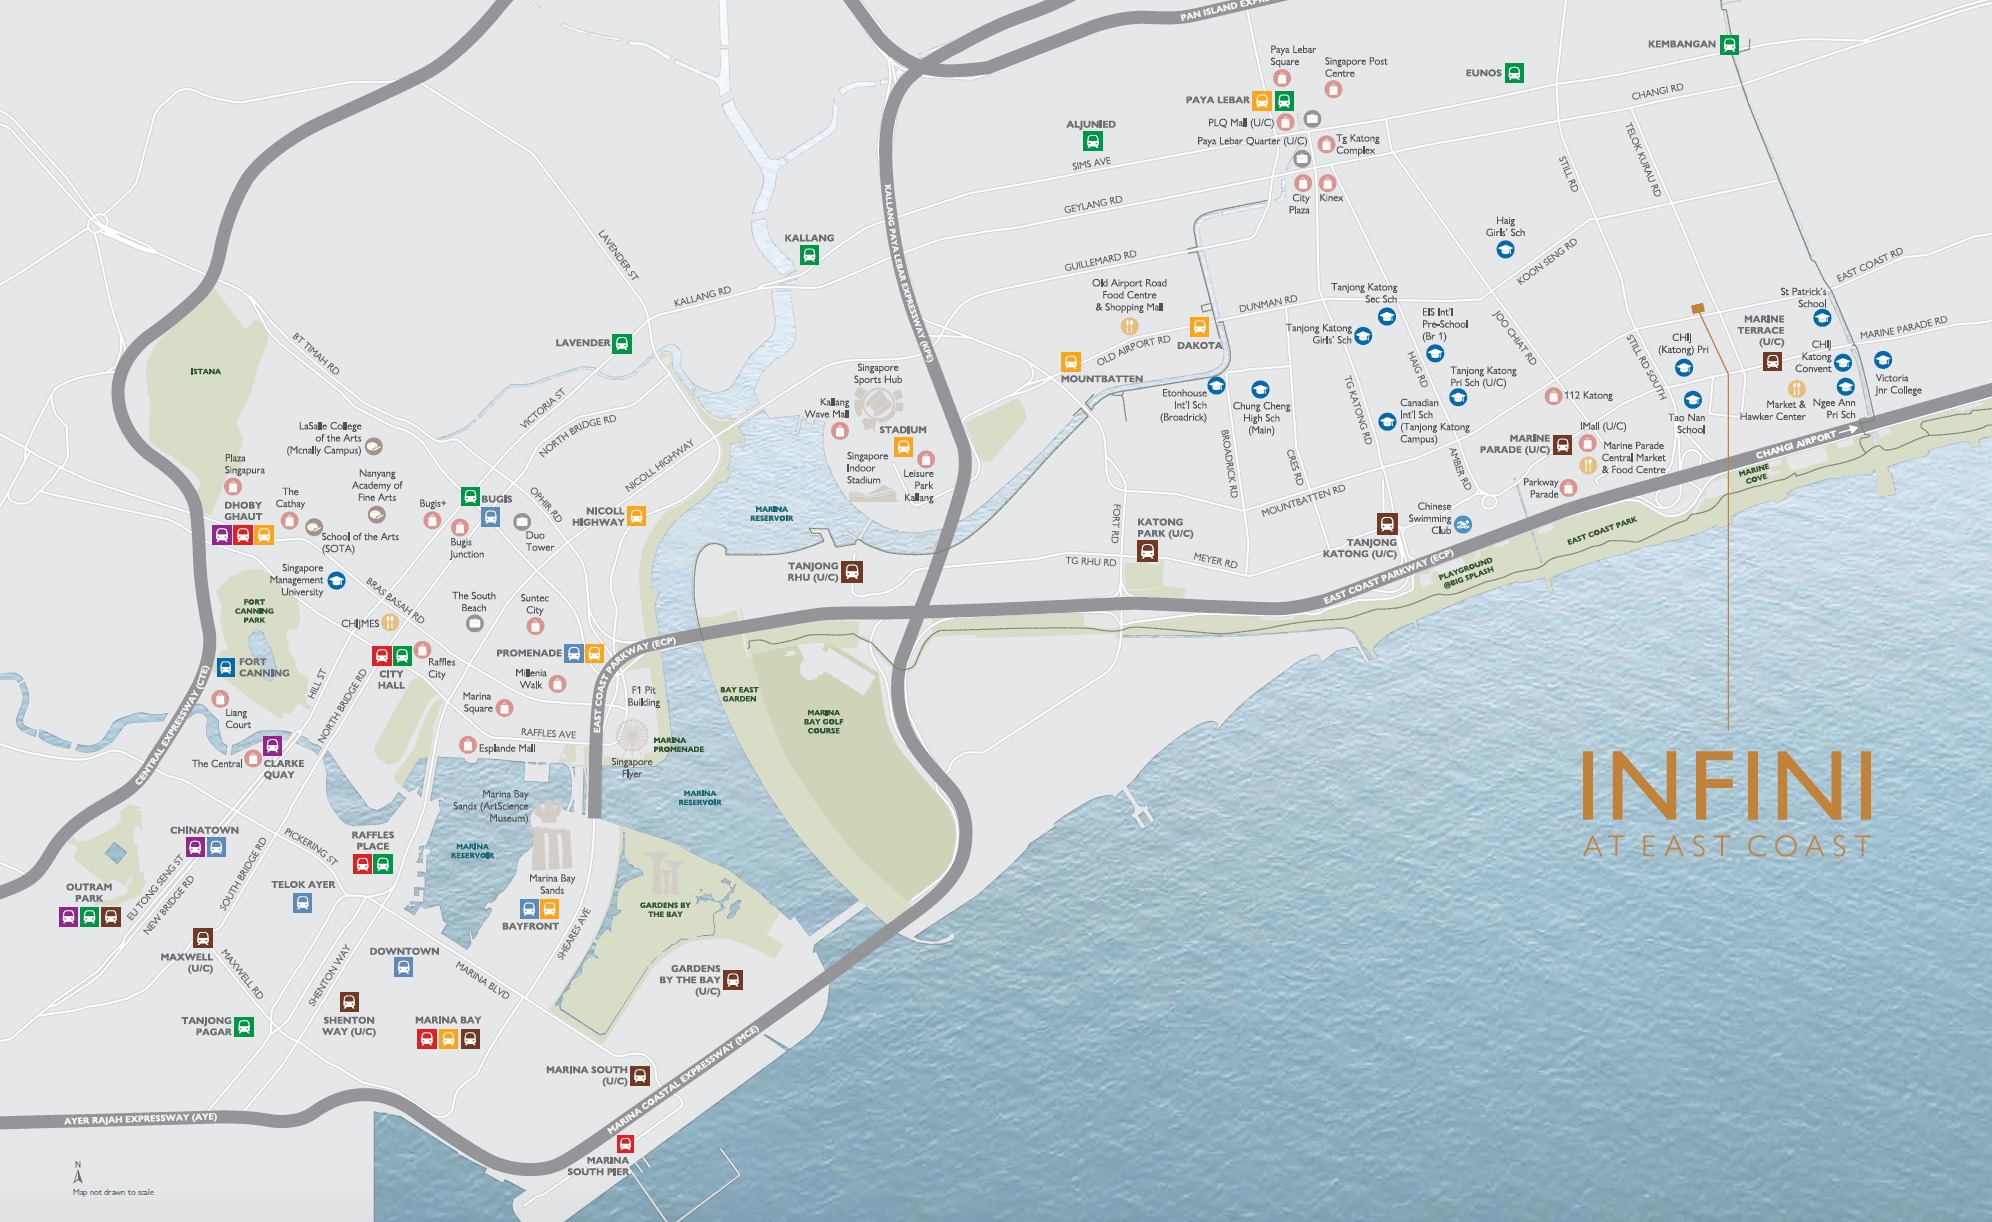 Infini at East Coast location map